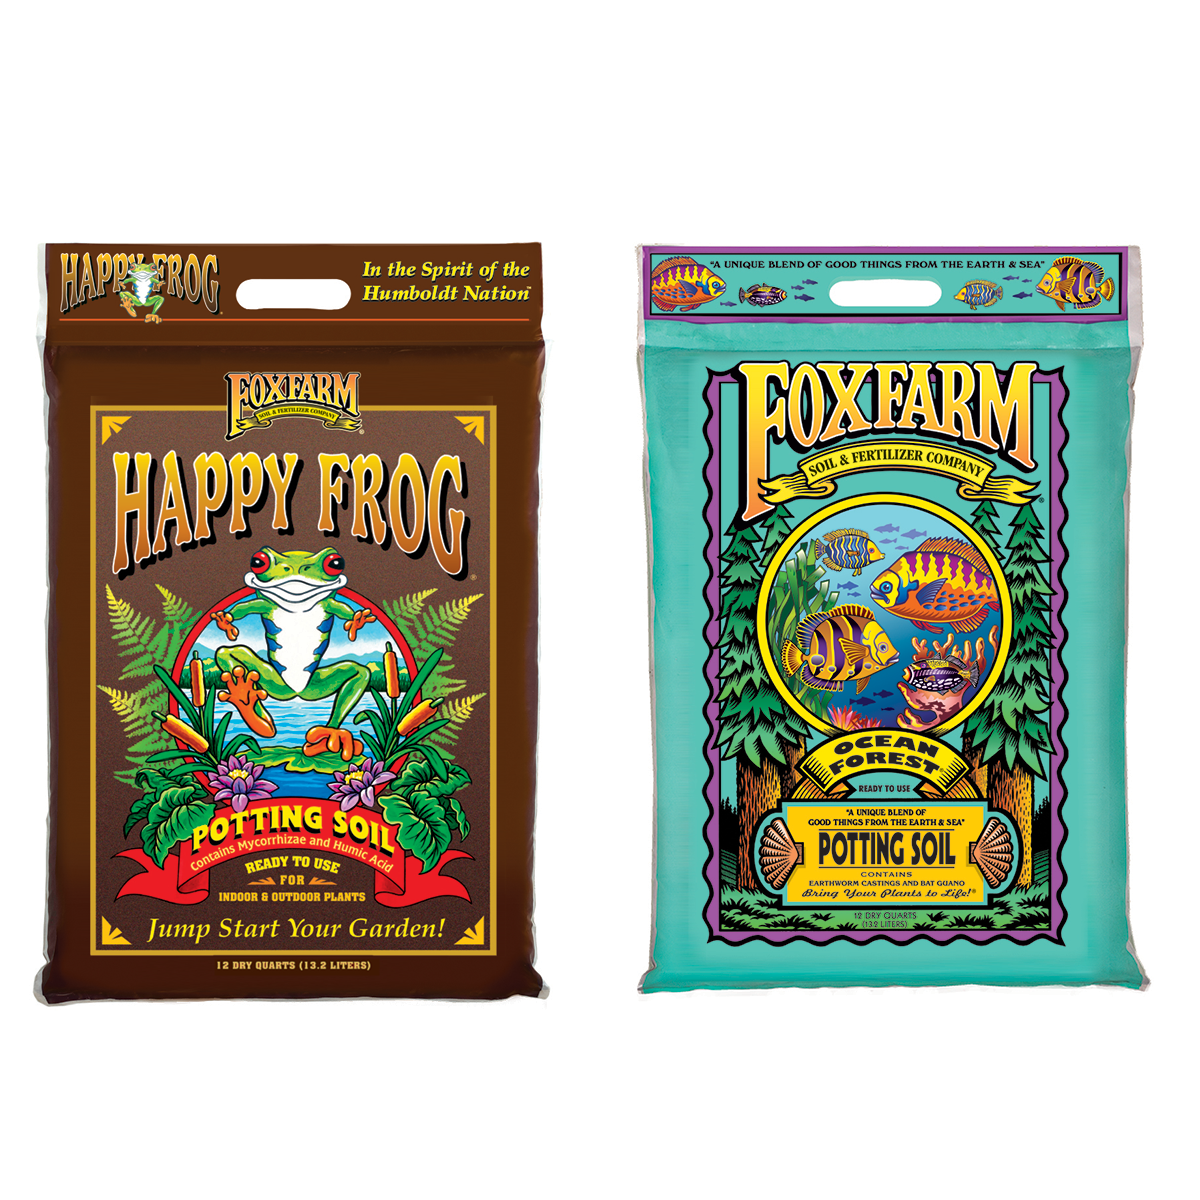 Details about   FoxFarm FX14047 2-Cubic Feet FoxFarm Happy Frog Potting Soil 